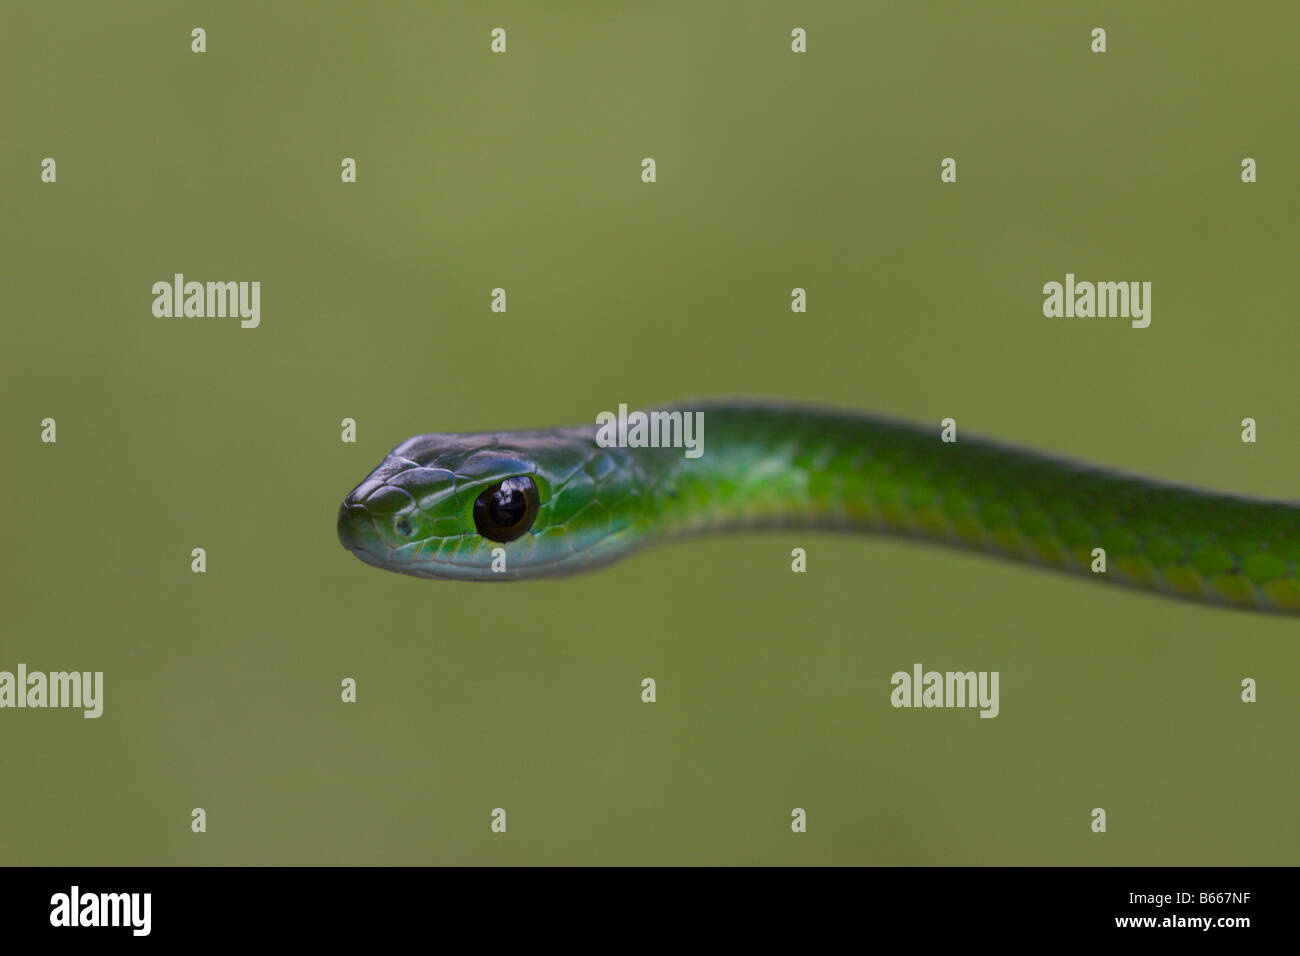 Green mamba serpent venimeux, Afrique Ouganda Banque D'Images